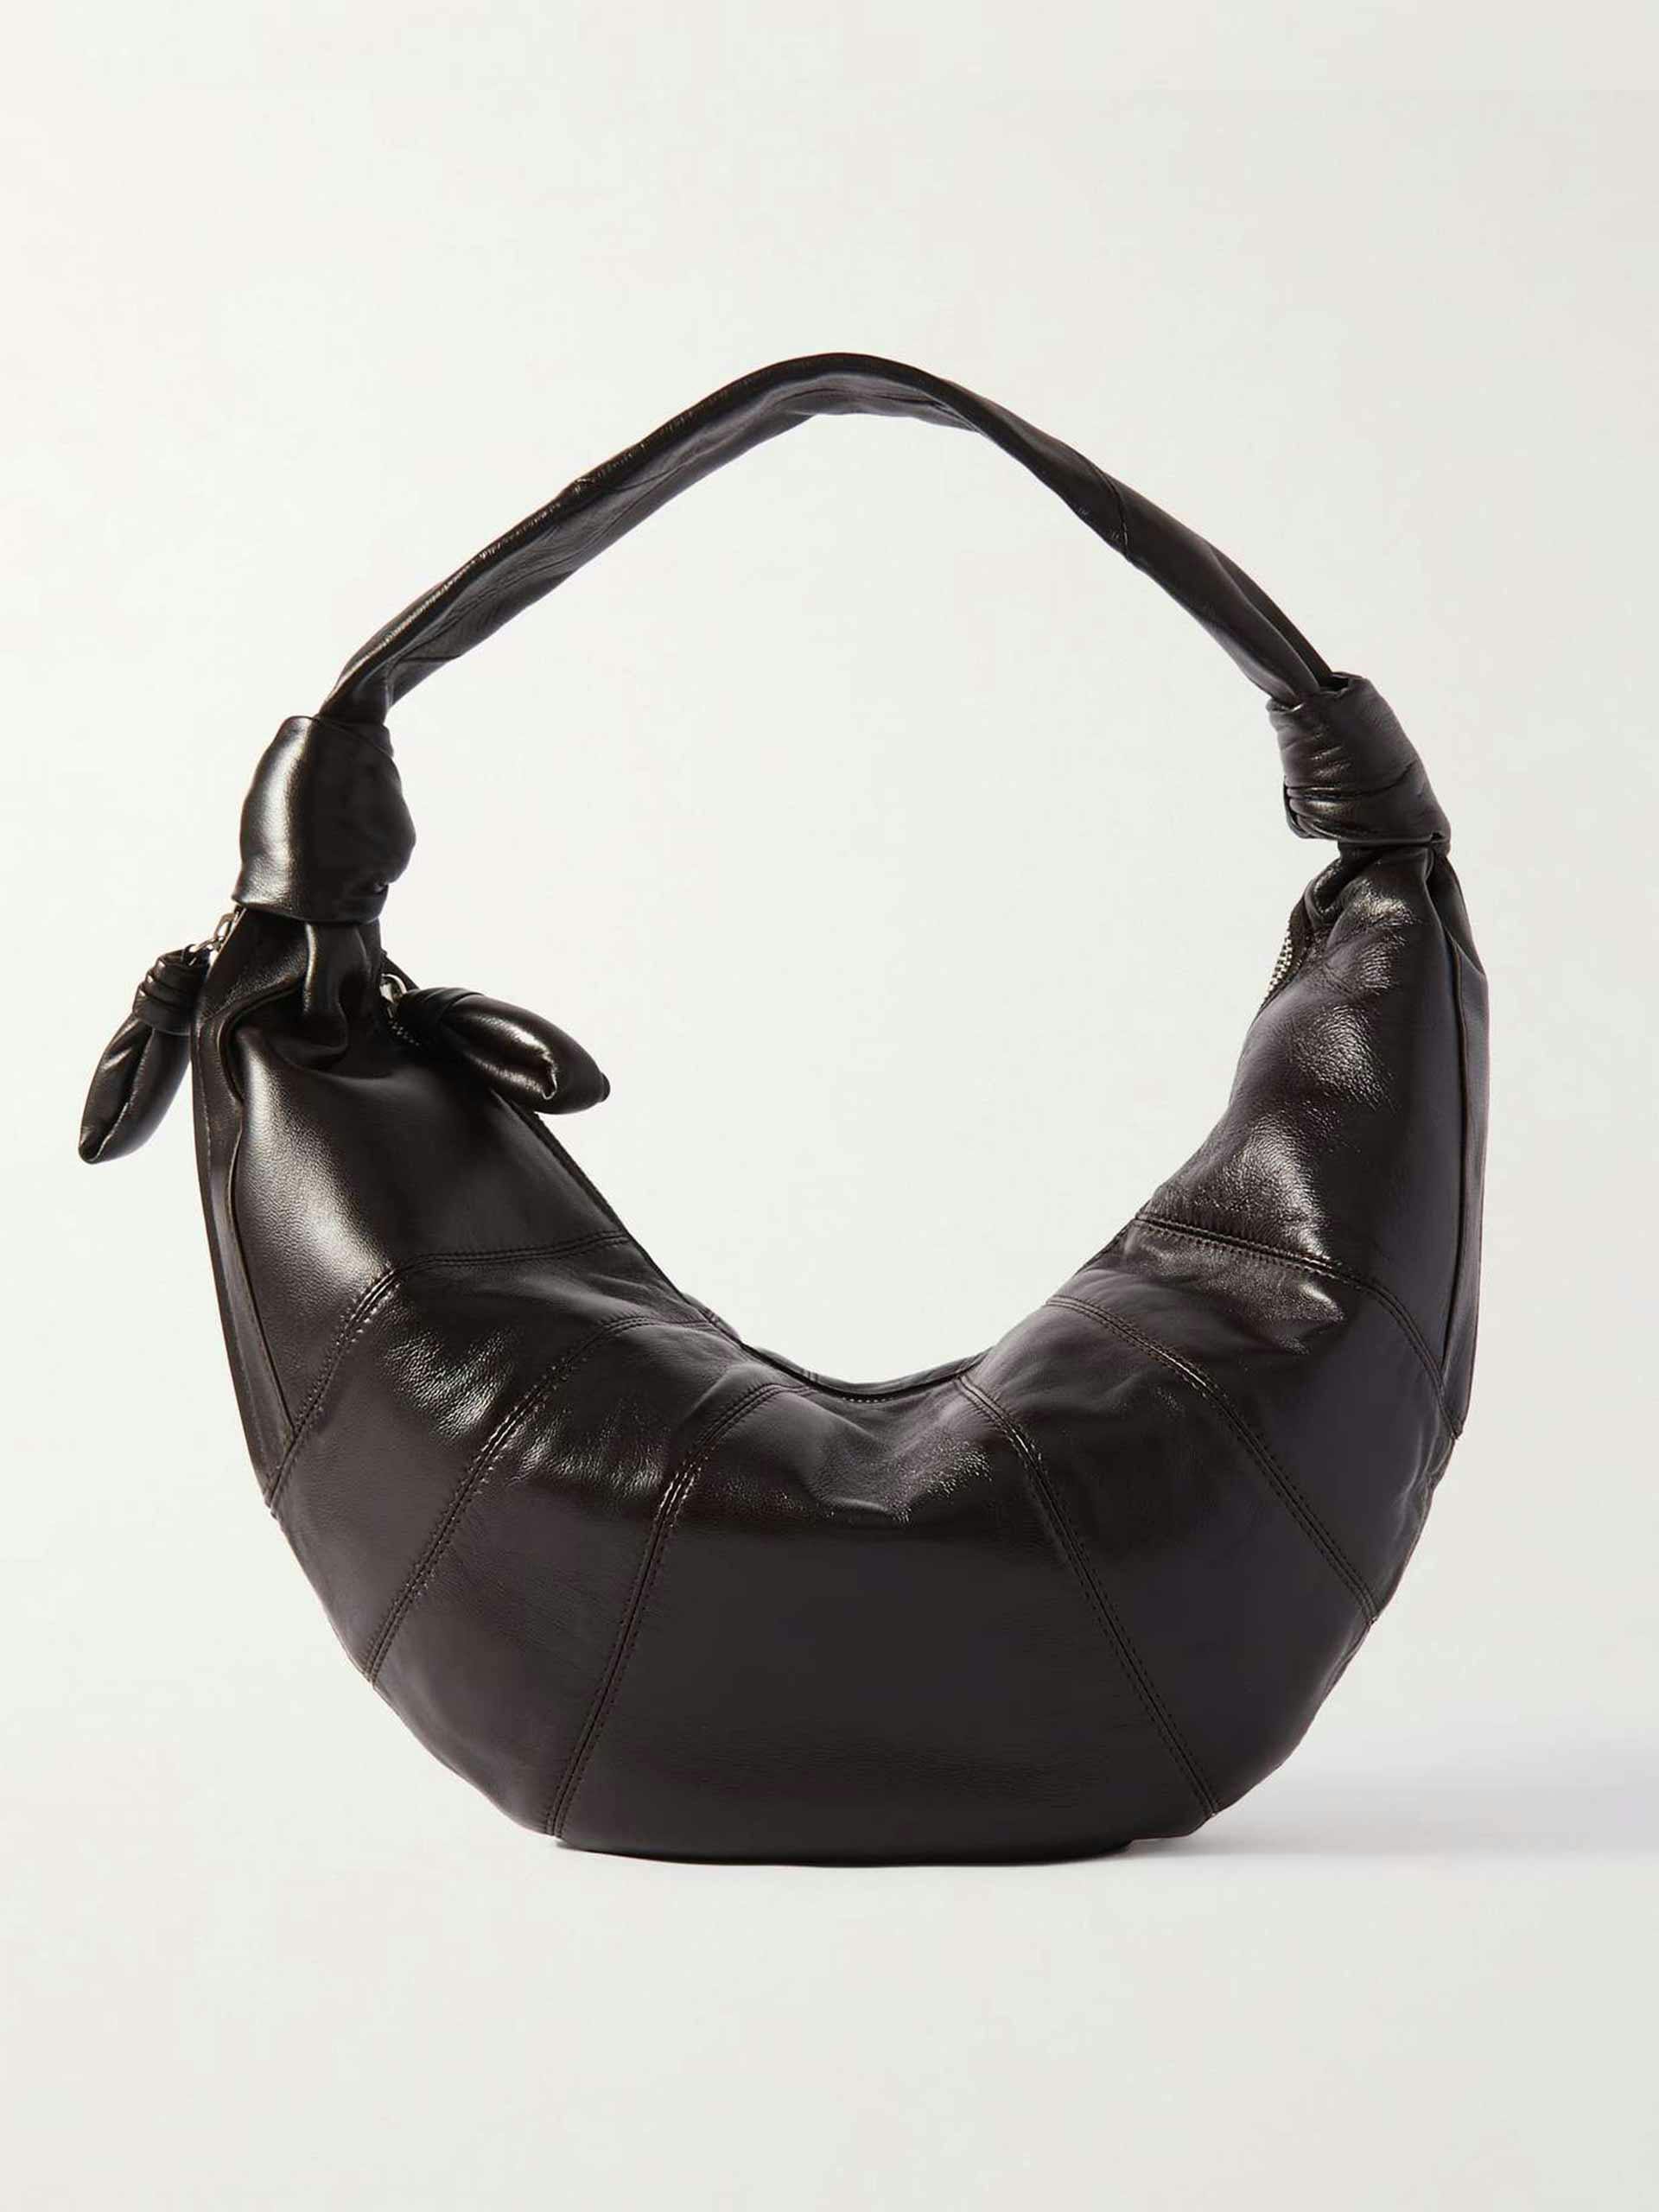 Fortune Croissant knotted leather shoulder bag